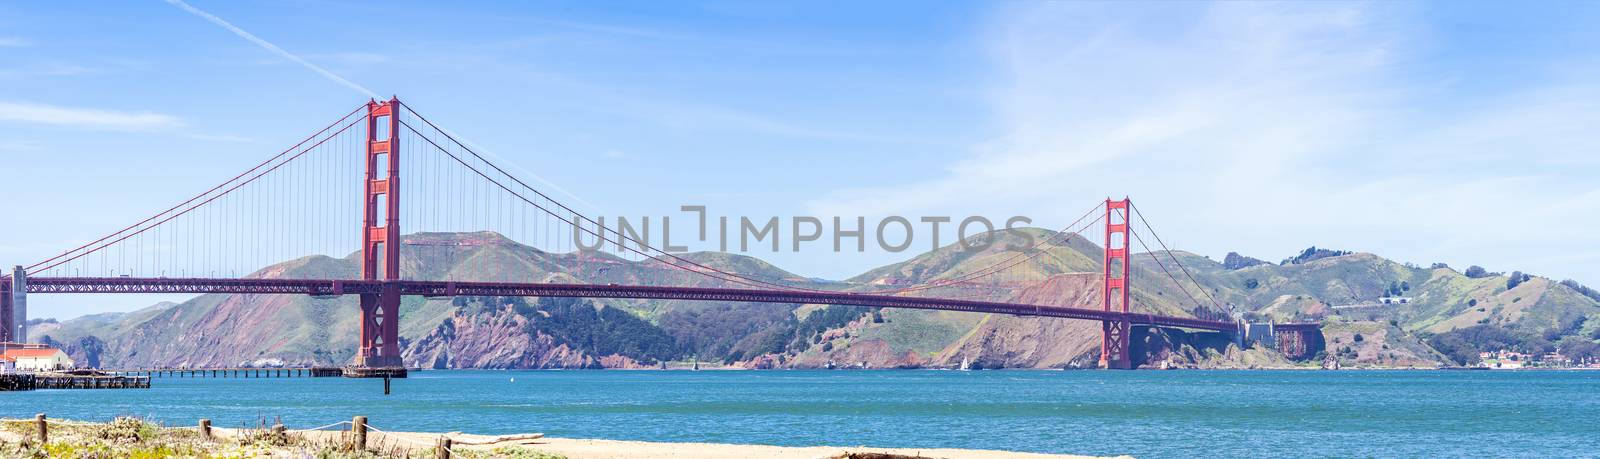 Golden Gate bridge in San Francisco California USA West Coast of Pacific Ocean panorama